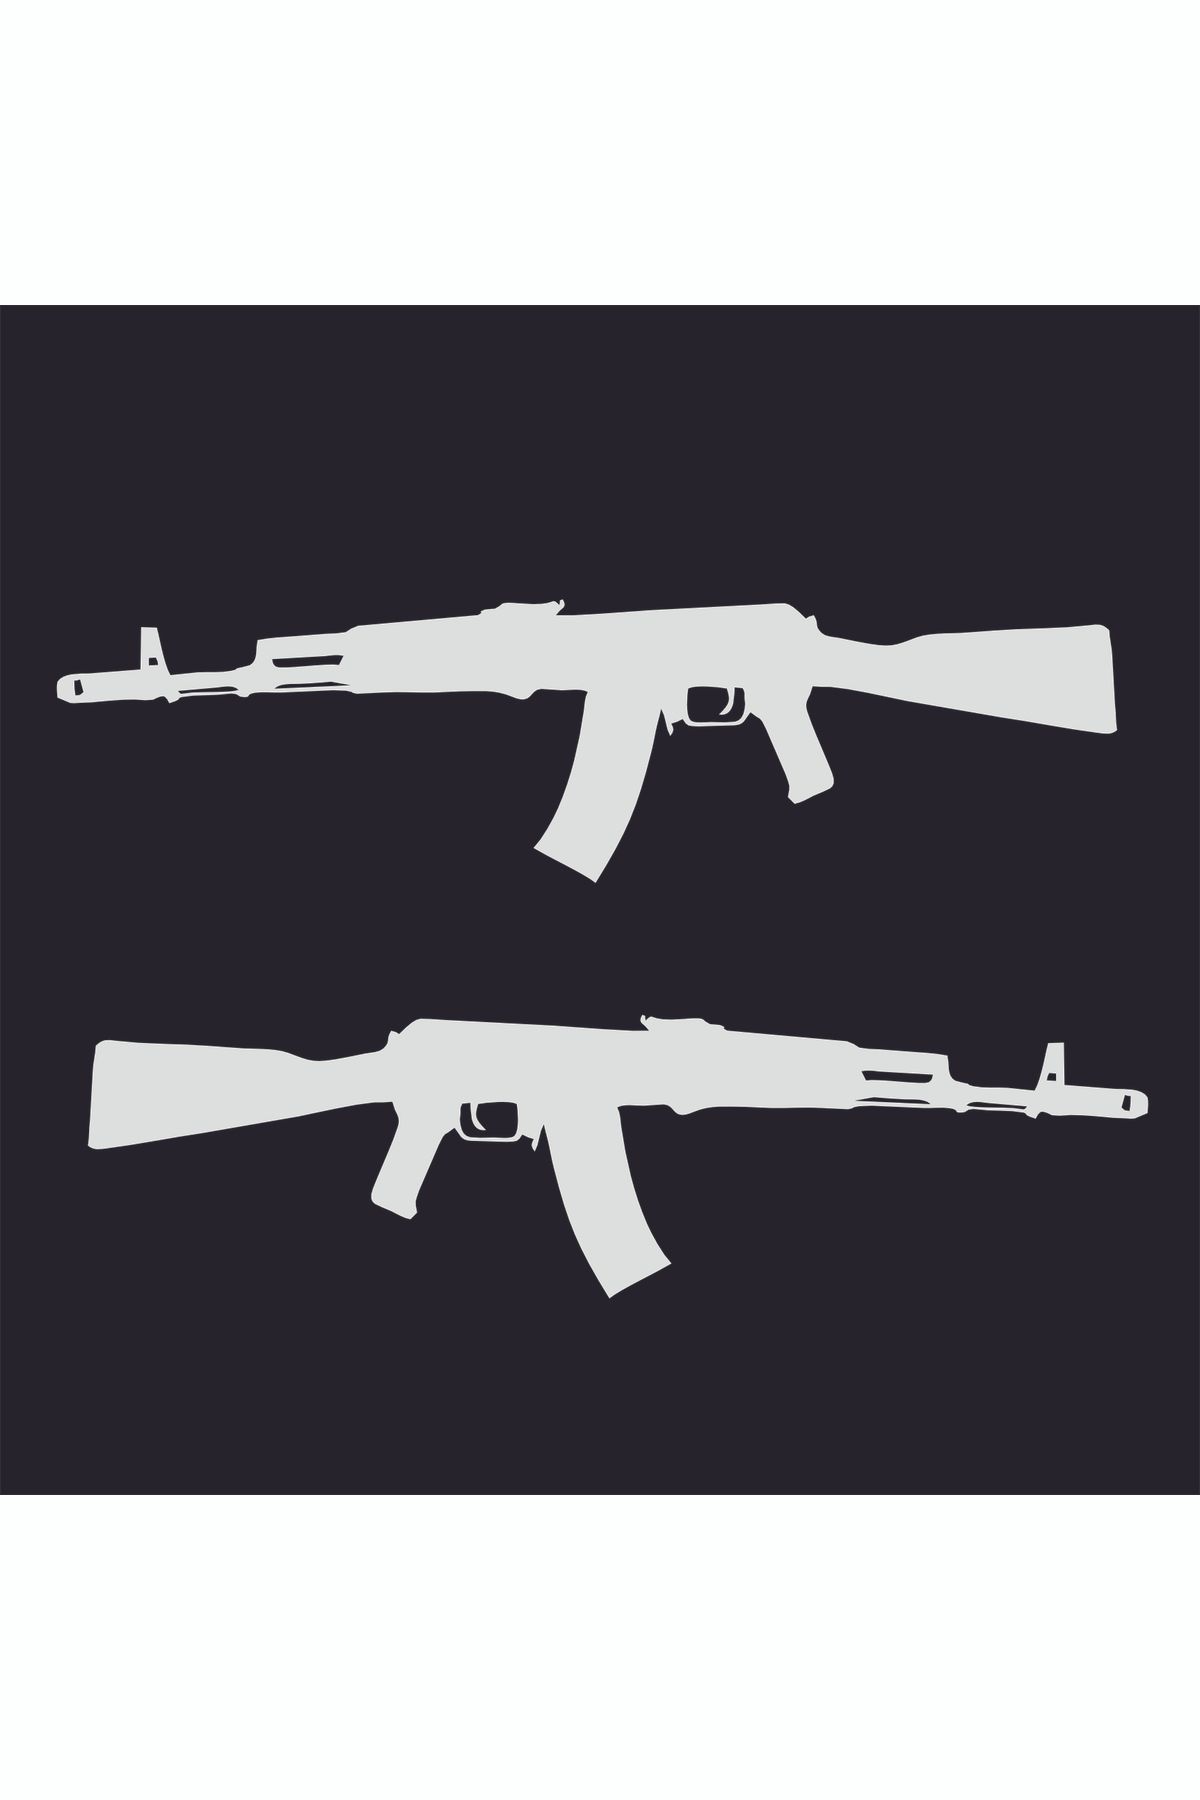 S&S HEDİYELİK EŞYA ak47 Kalashnikov Pubg 15x5 cm 2 adet Araba Araç Oto Motor Sticker Etiket Folyo